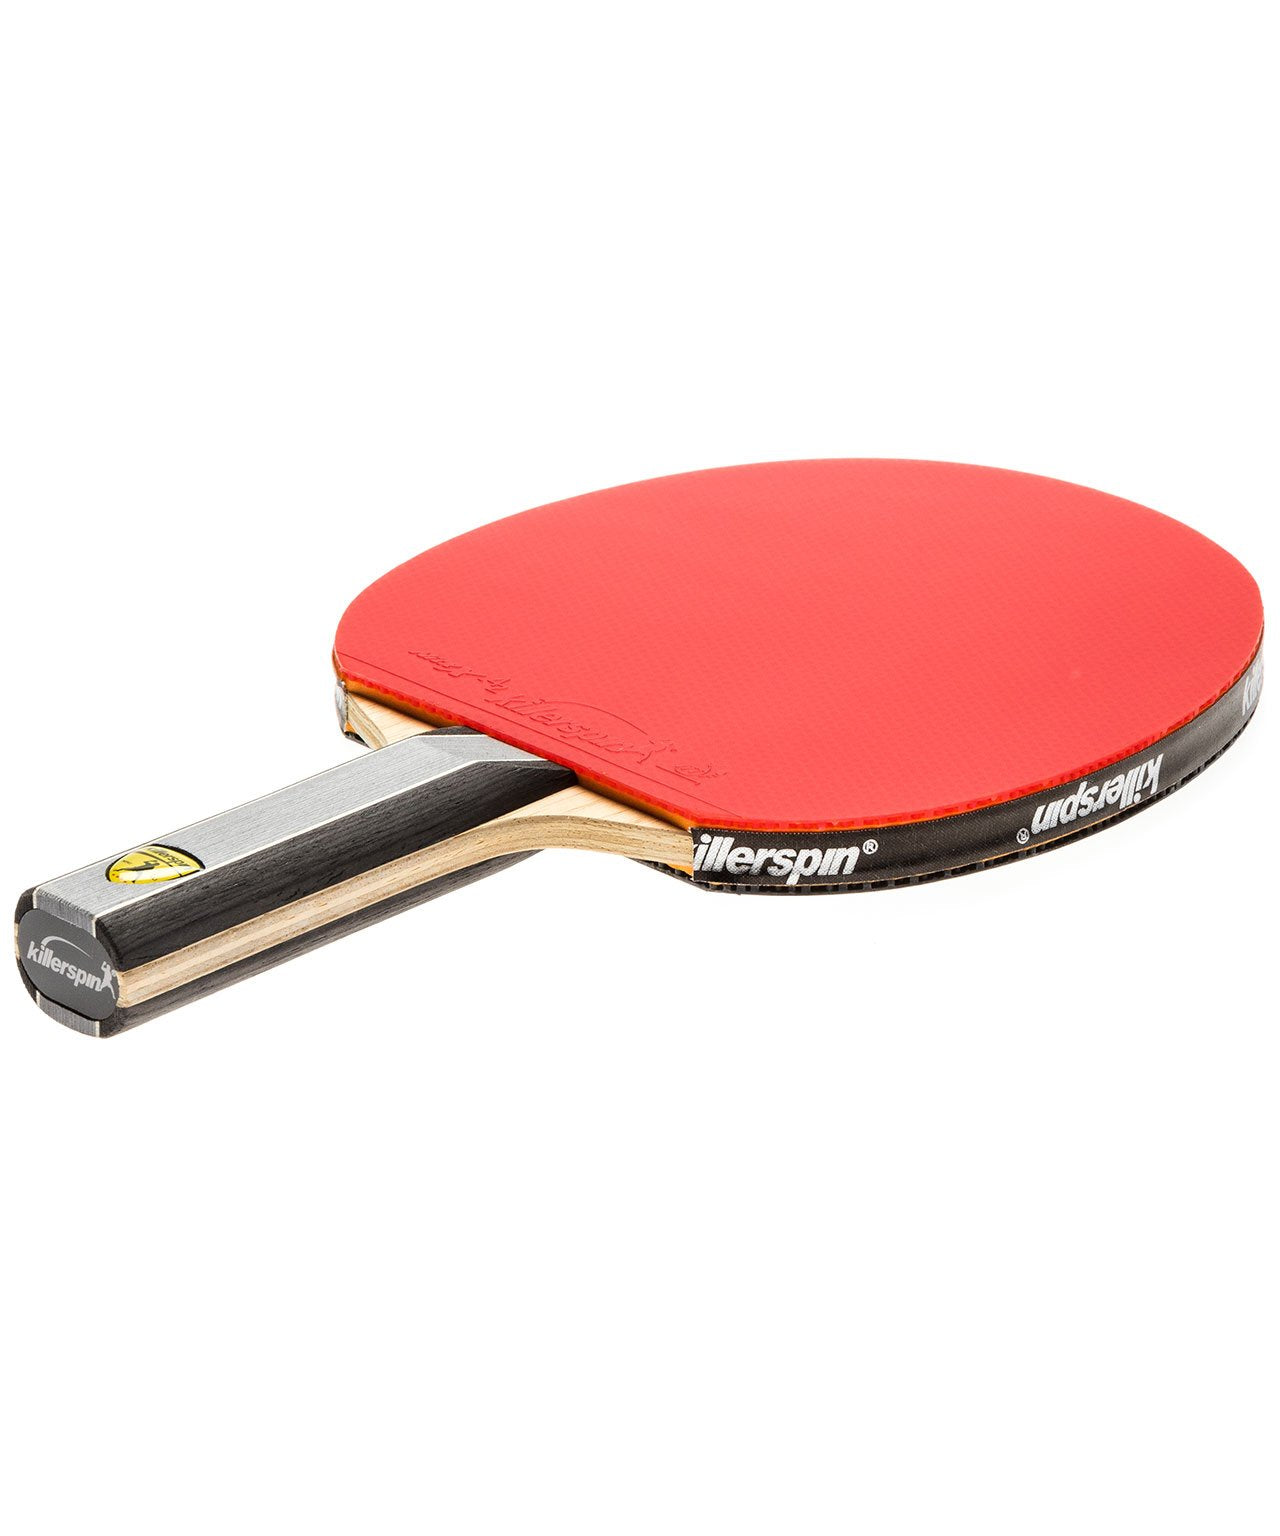 Kido 7P RTG Ping Pong Paddle | Killerspin Table Tennis